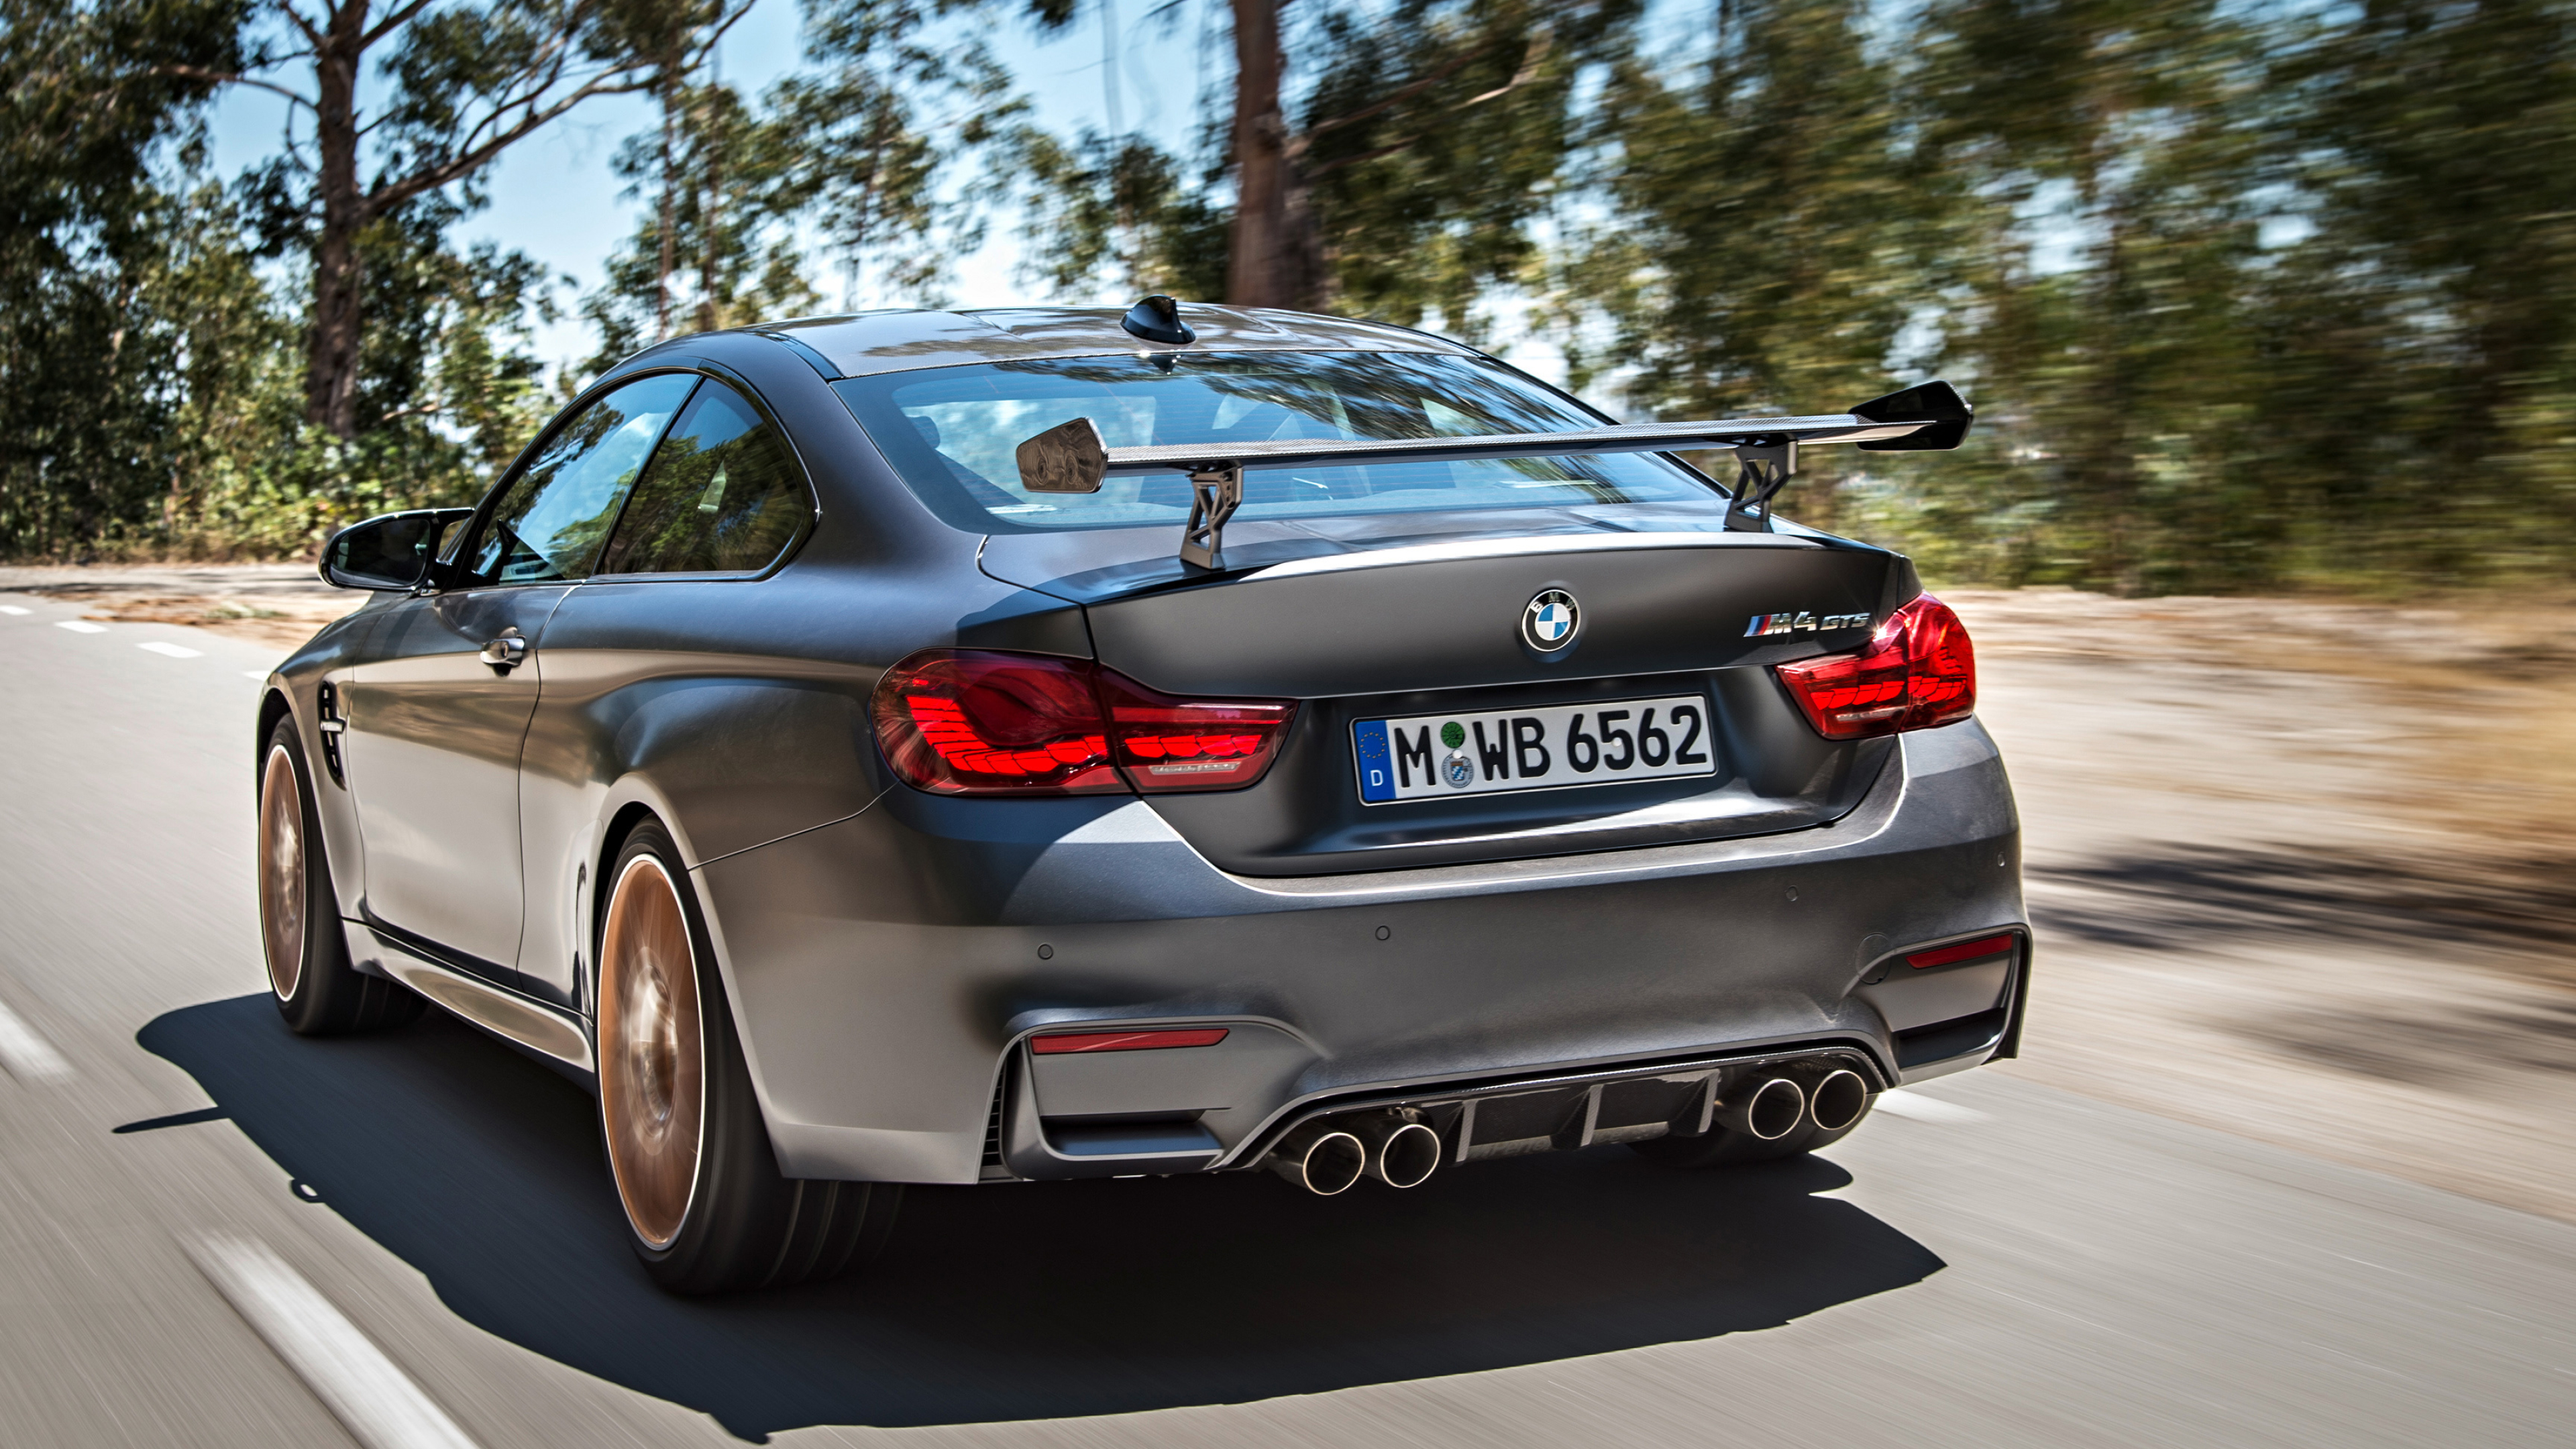 BMW M4, Stunning desktop wallpapers, 4K Ultra HD, High-speed capabilities, 3840x2160 4K Desktop